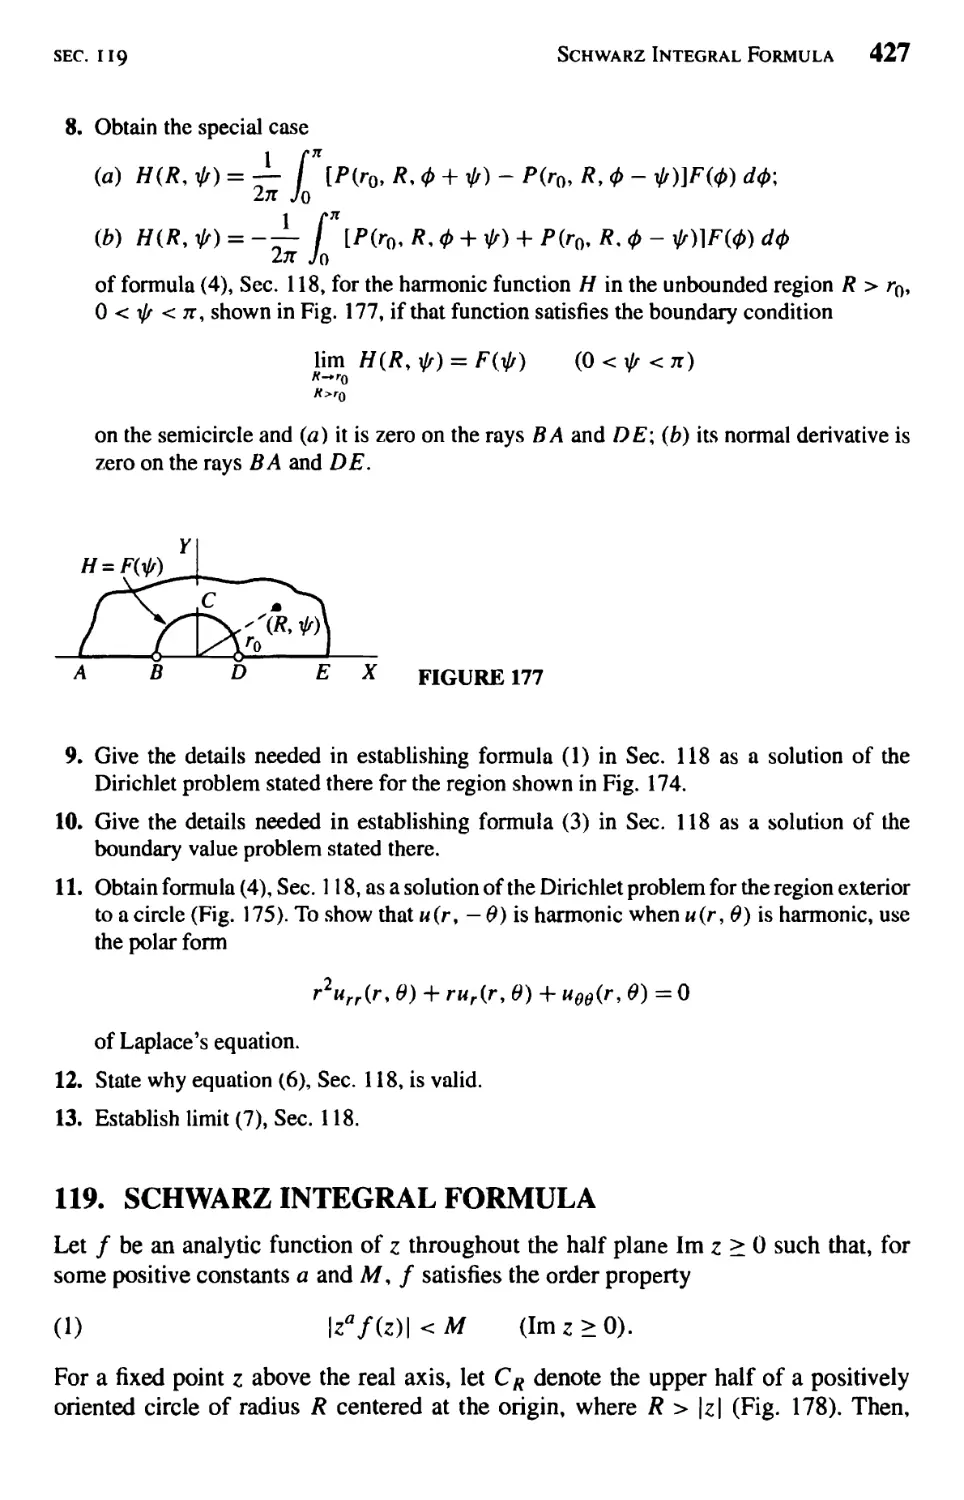 Schwarz Integral Formula